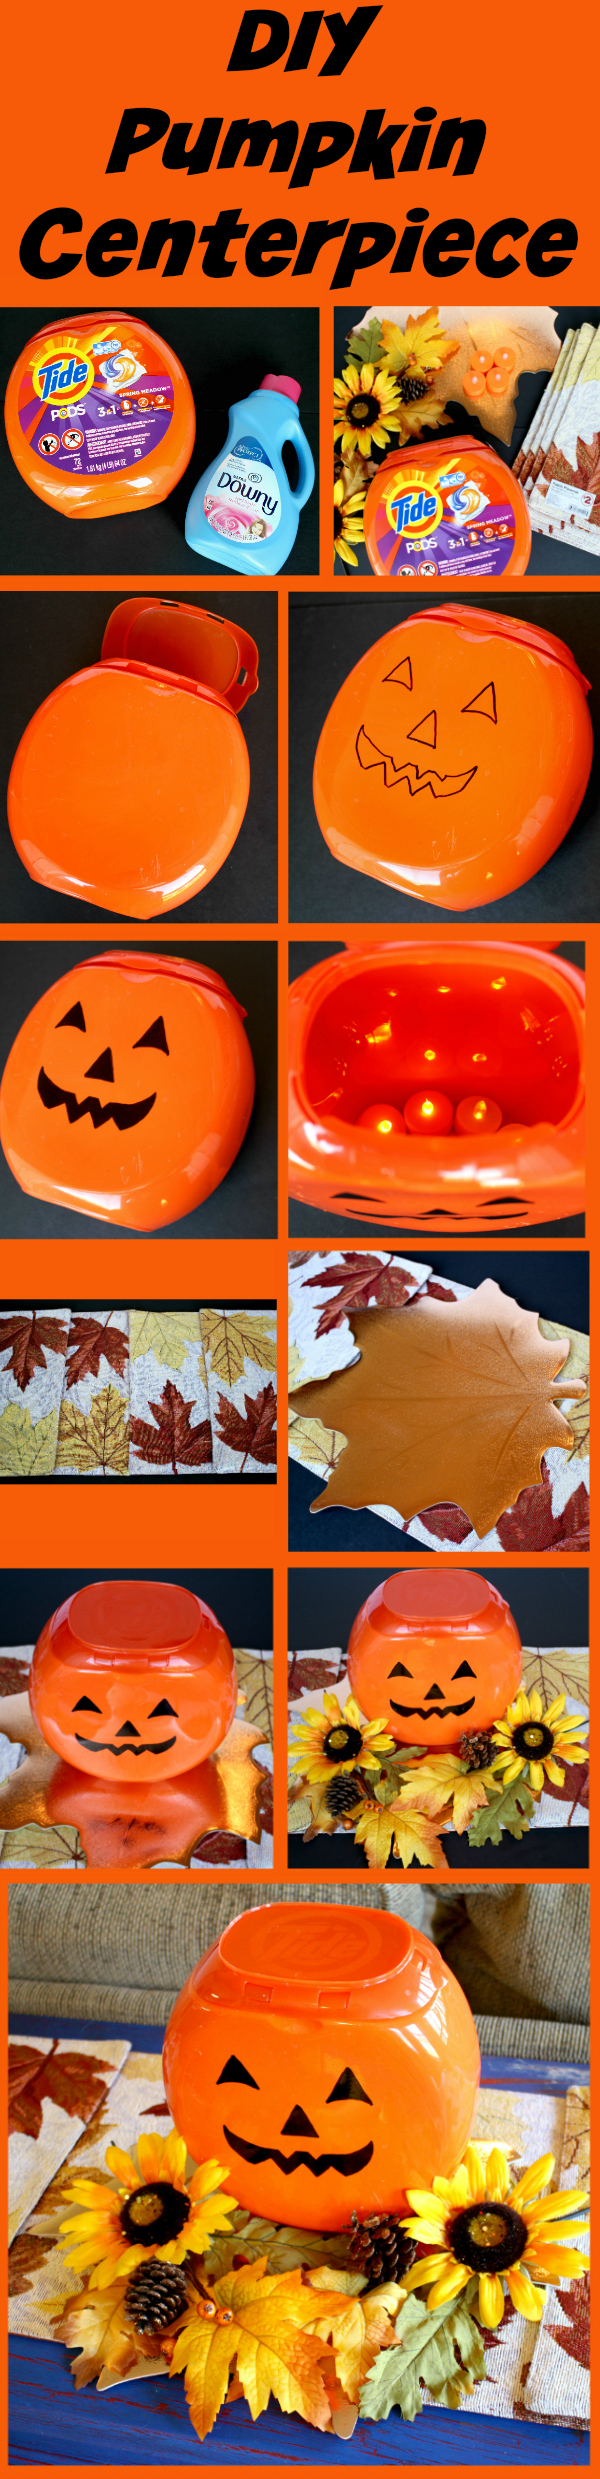 DIY Pumpkin Centerpiece plus Save with Smart Coupons at Family Dollar®